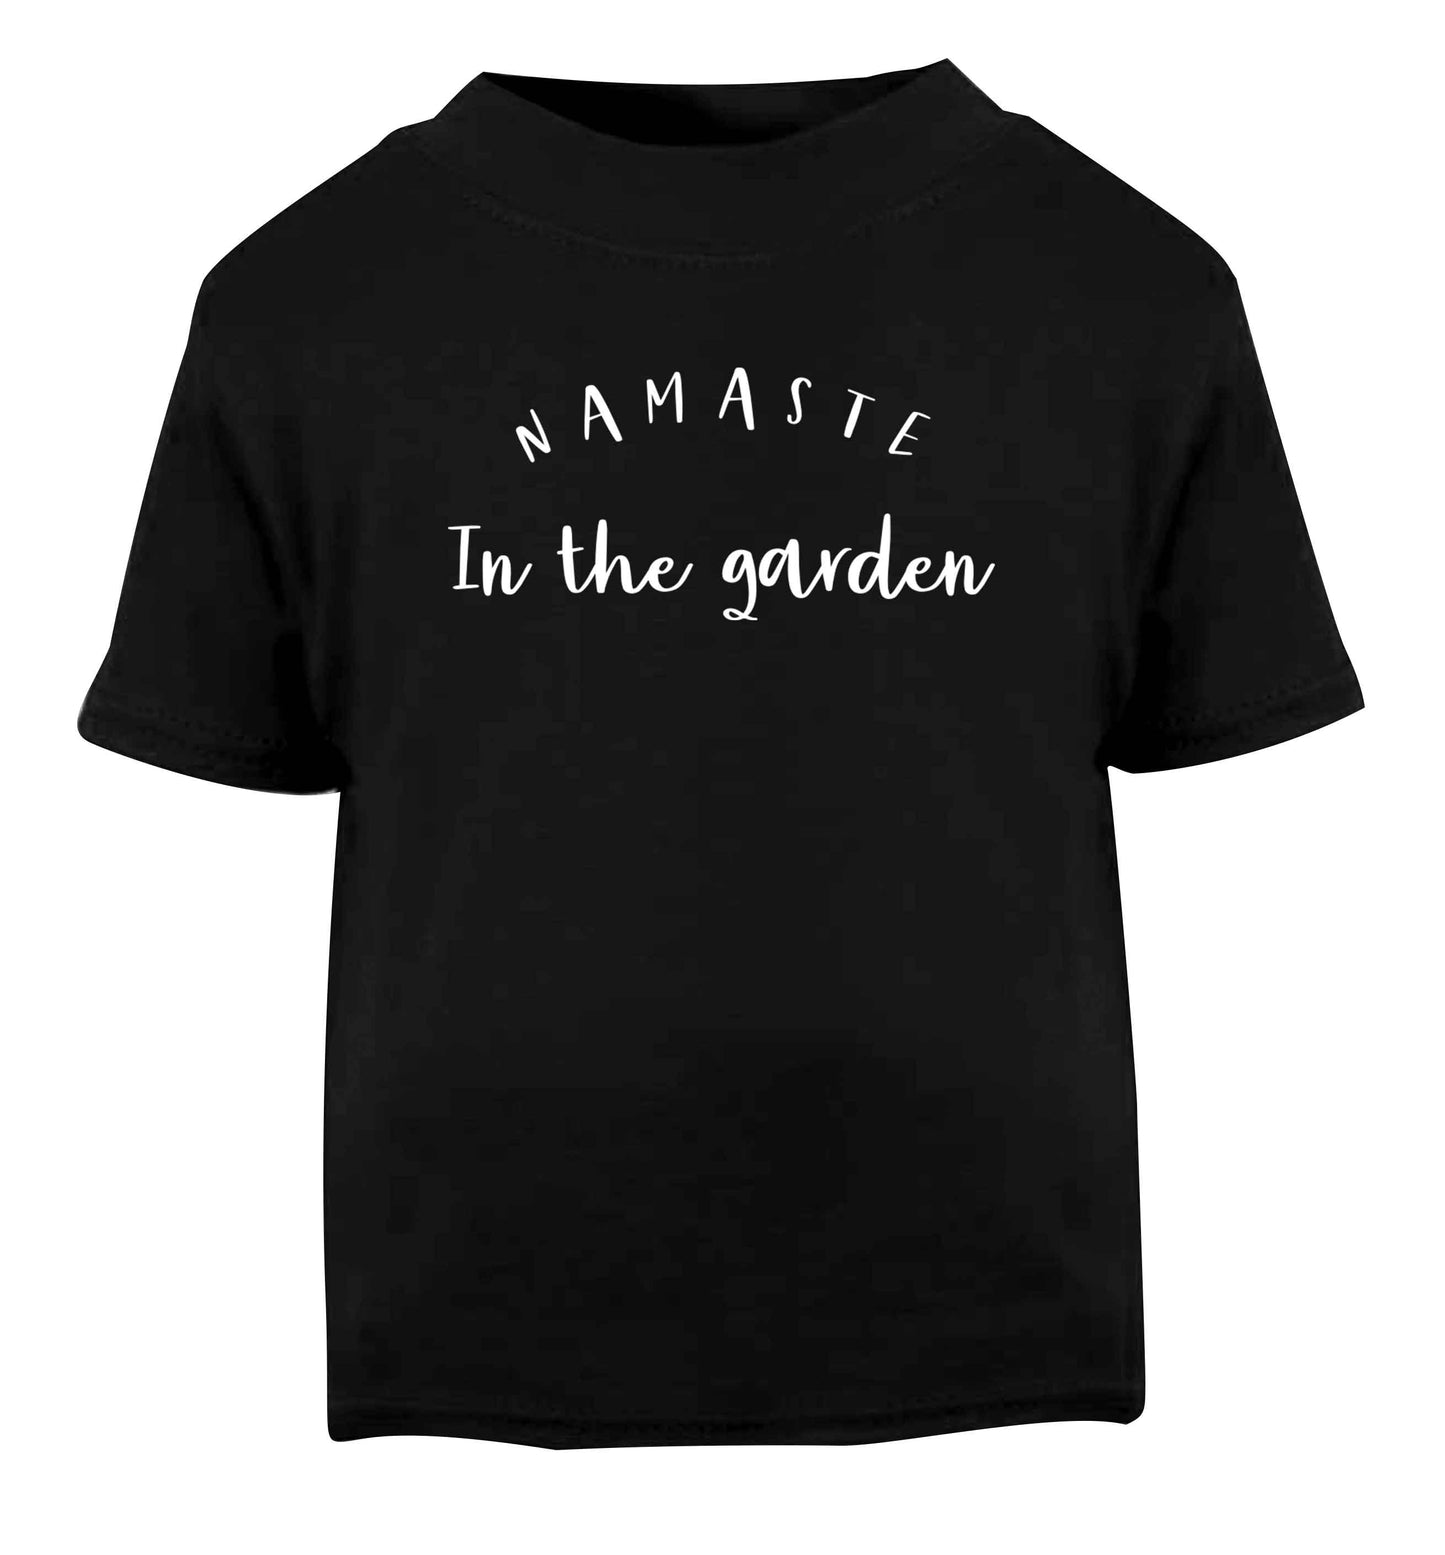 Namaste in the garden Black Baby Toddler Tshirt 2 years